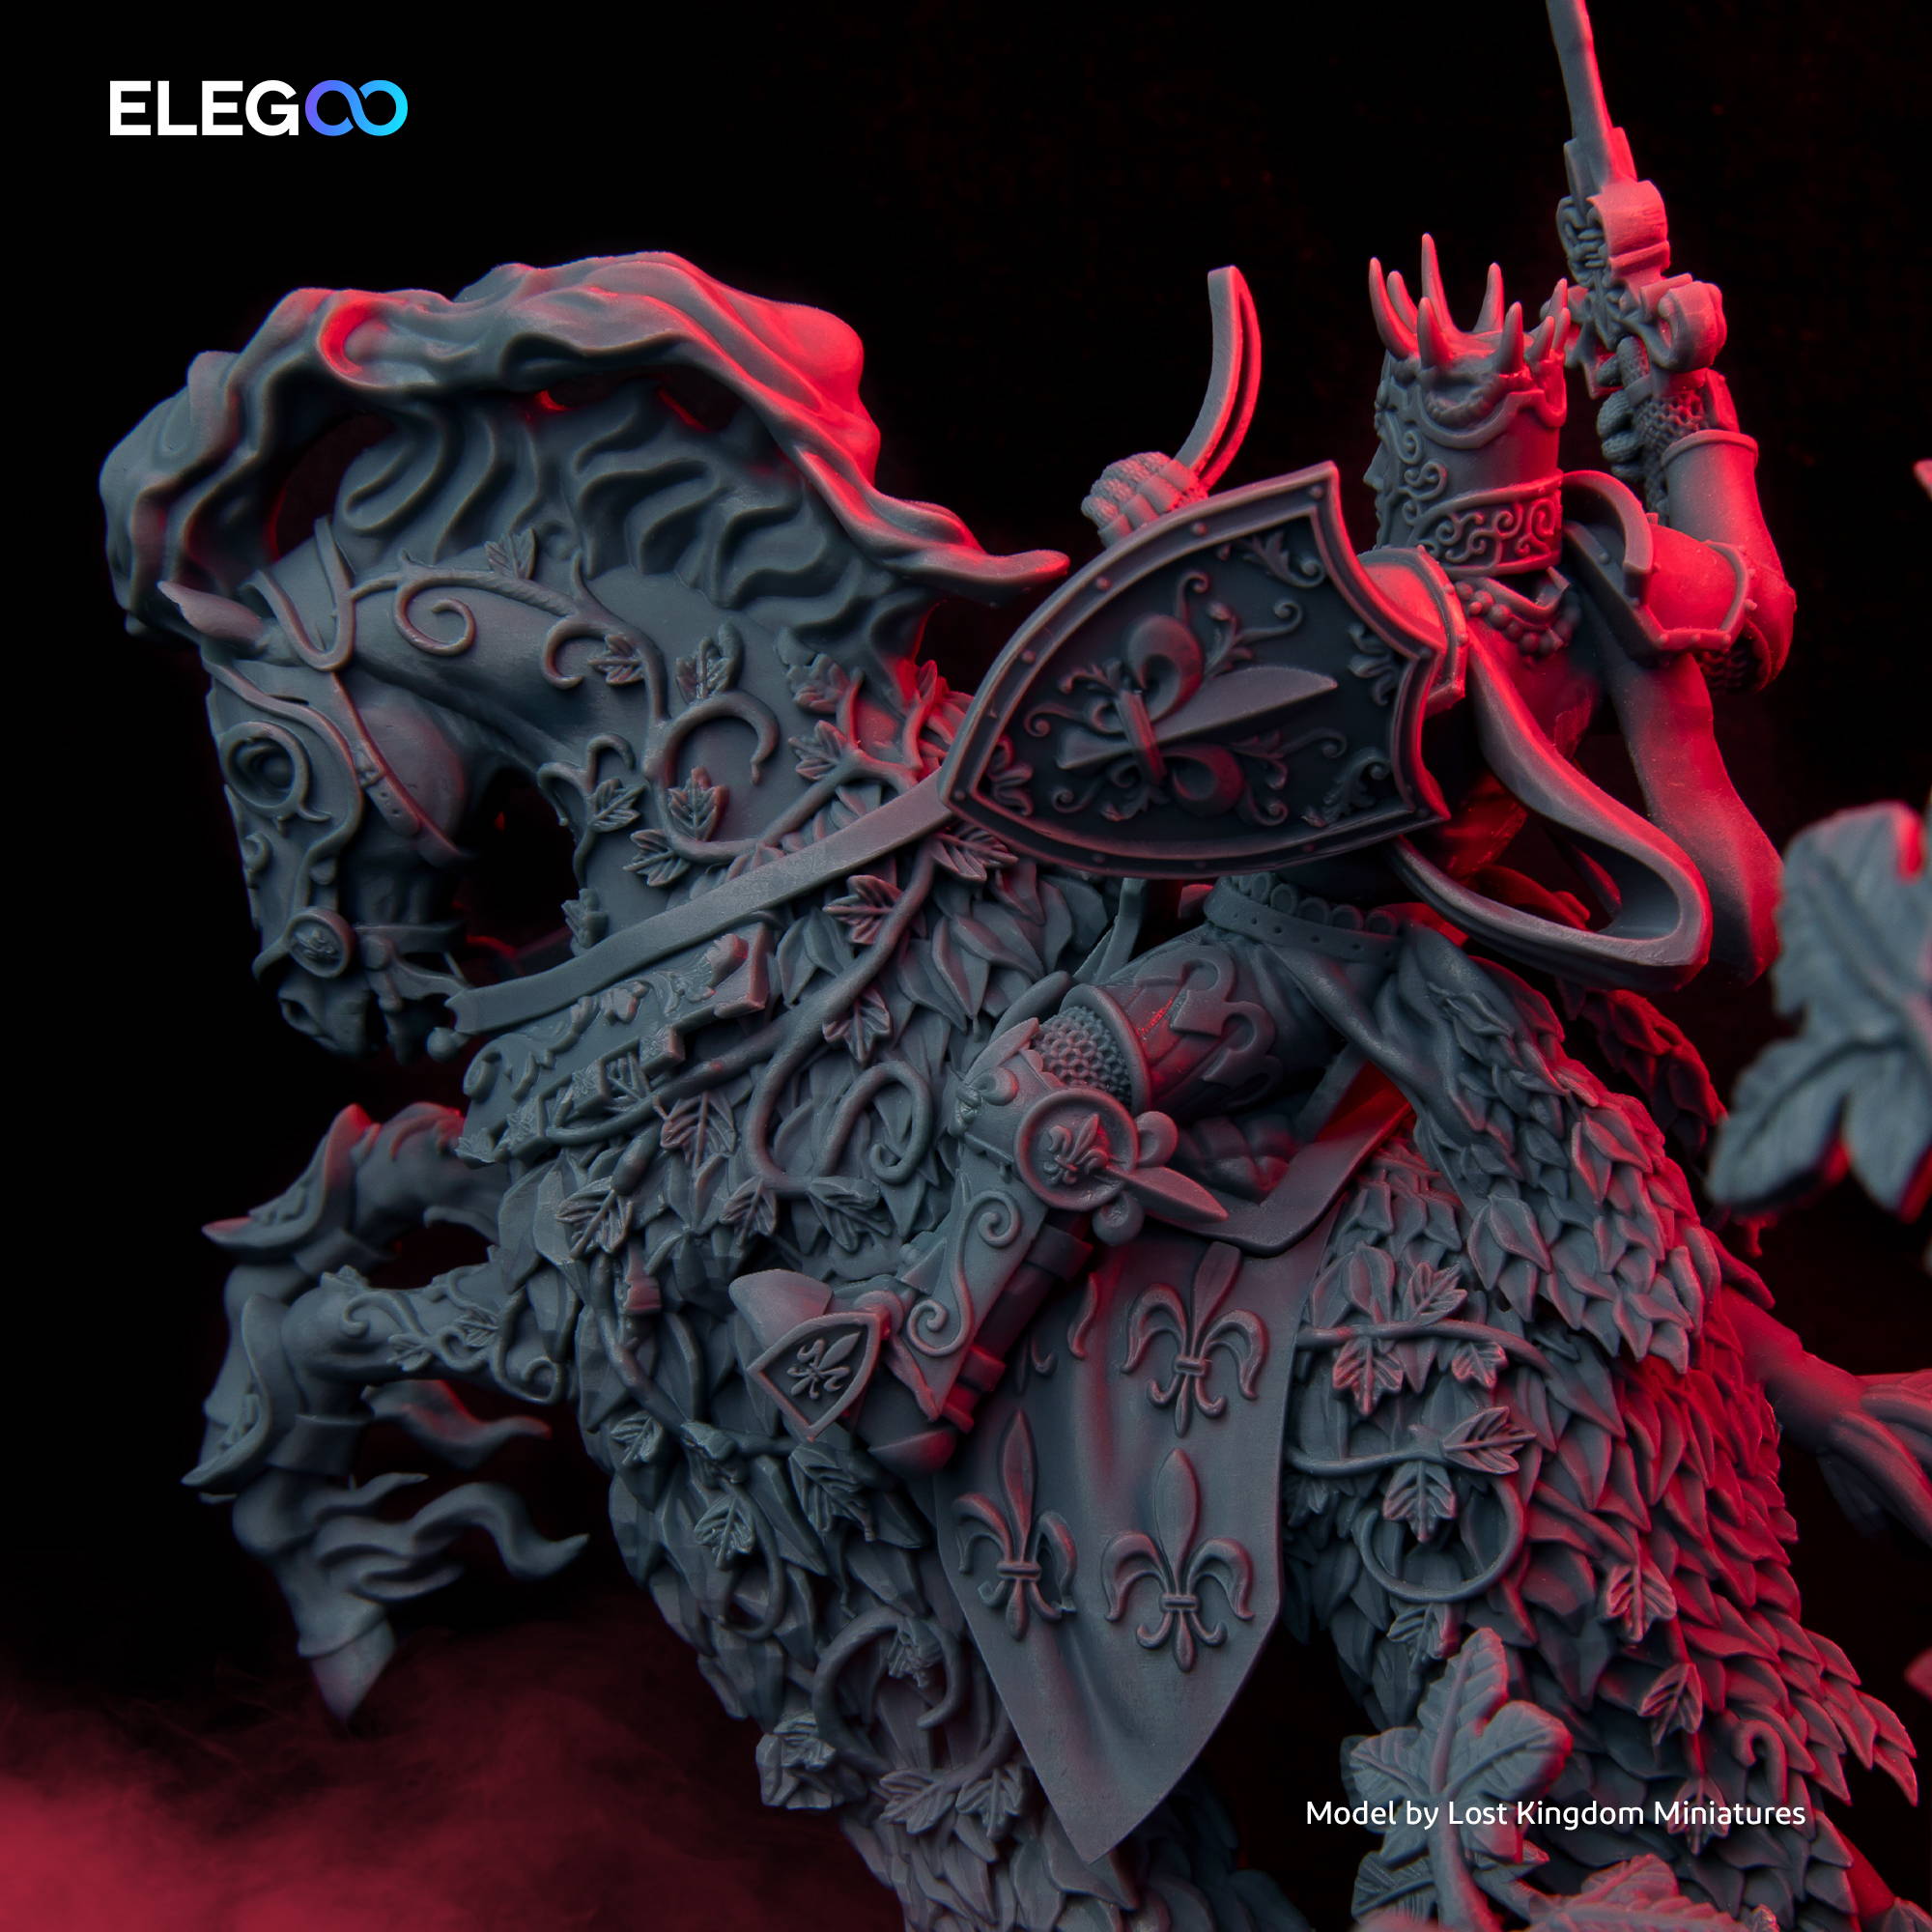  ELEGOO 8K Standard Resin Photopolymer Resin 405nm 3D